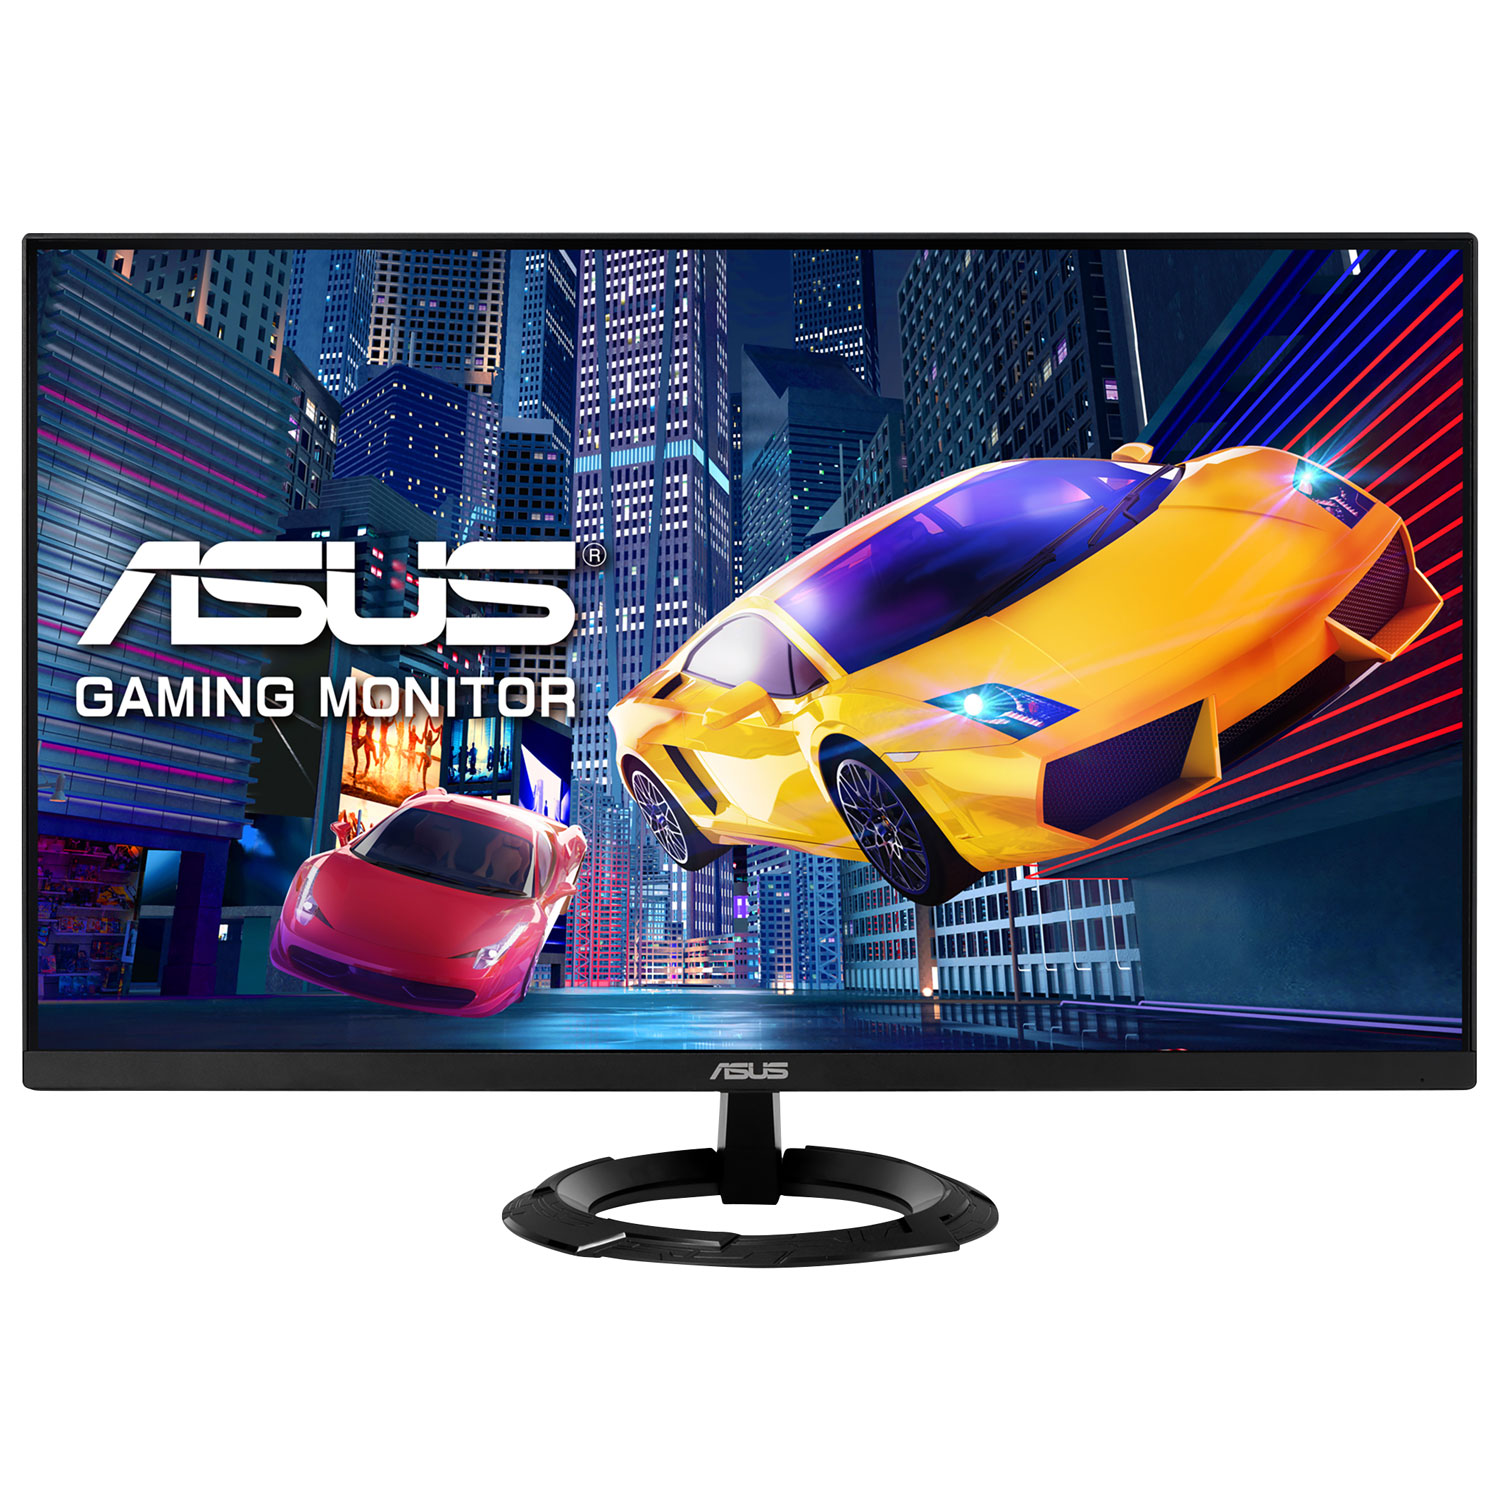 Asus 27" FHD 75Hz 1ms GTG IPS LCD FreeSync Gaming Monitor (VZ279QG1R)